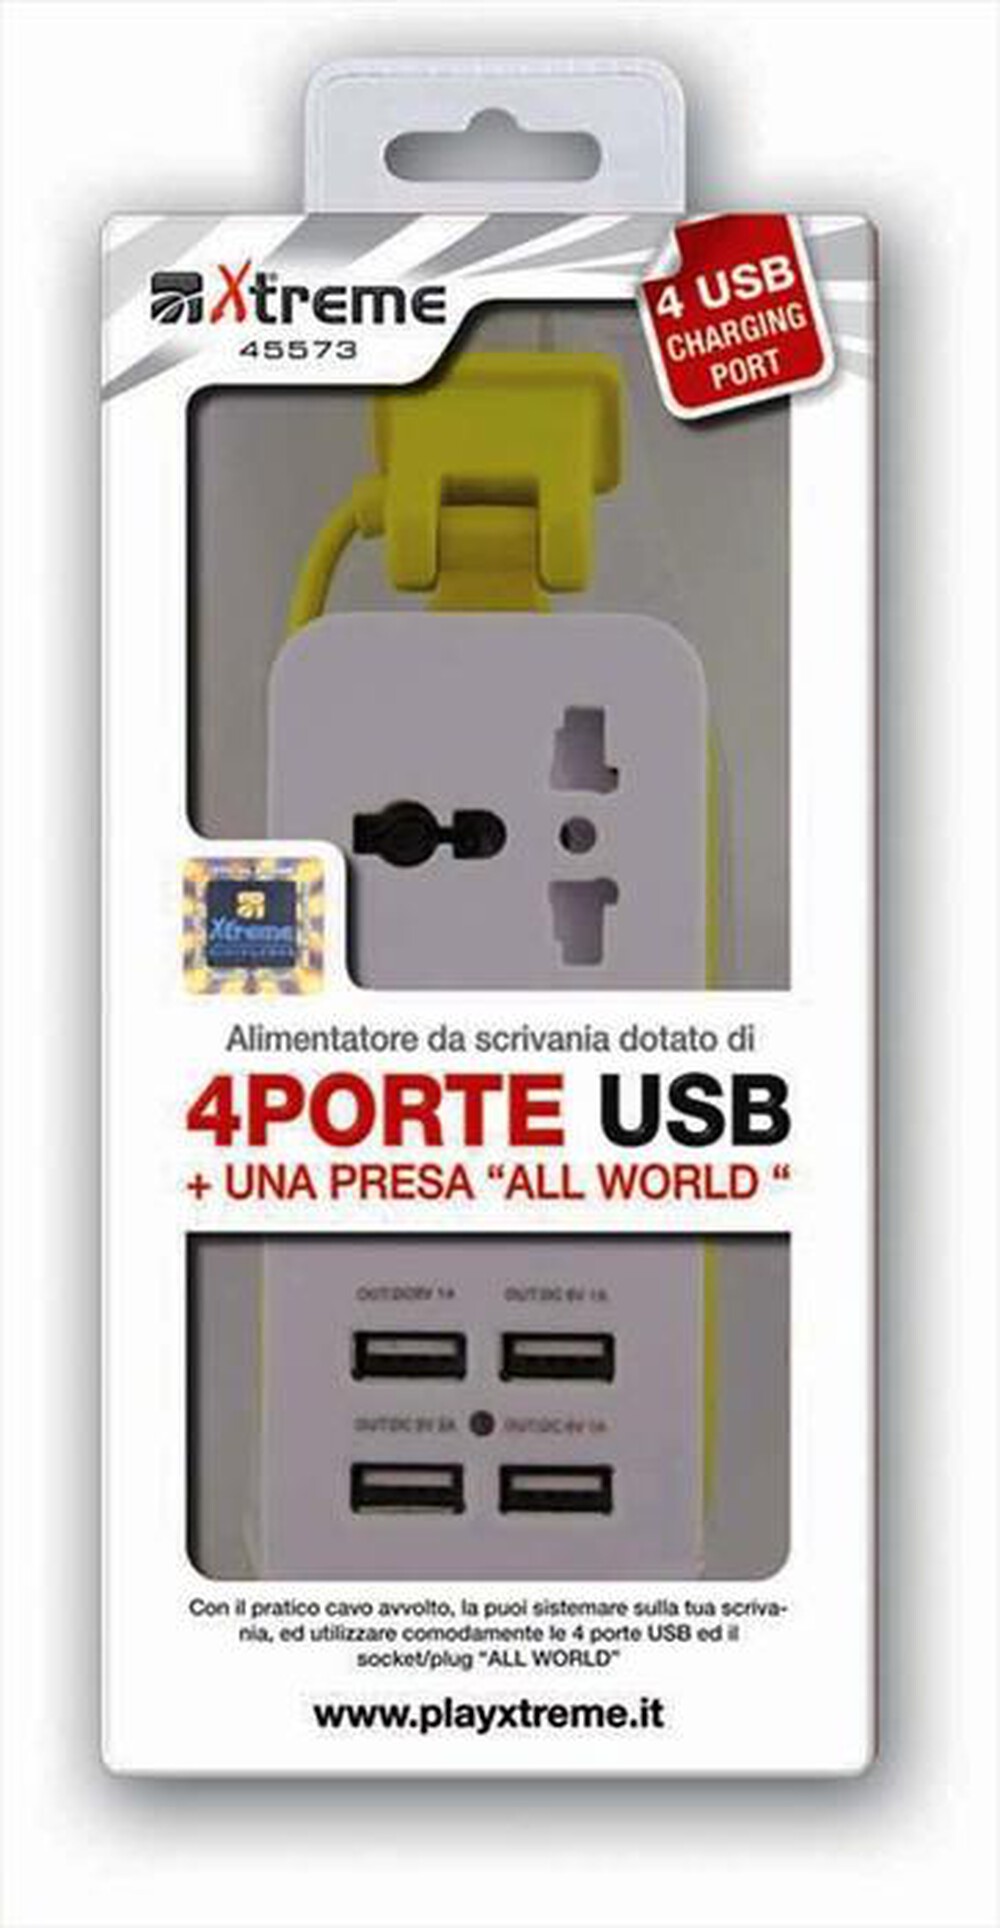 "XTREME - 45573 - Alimentatore multipresa 4 porte USB"